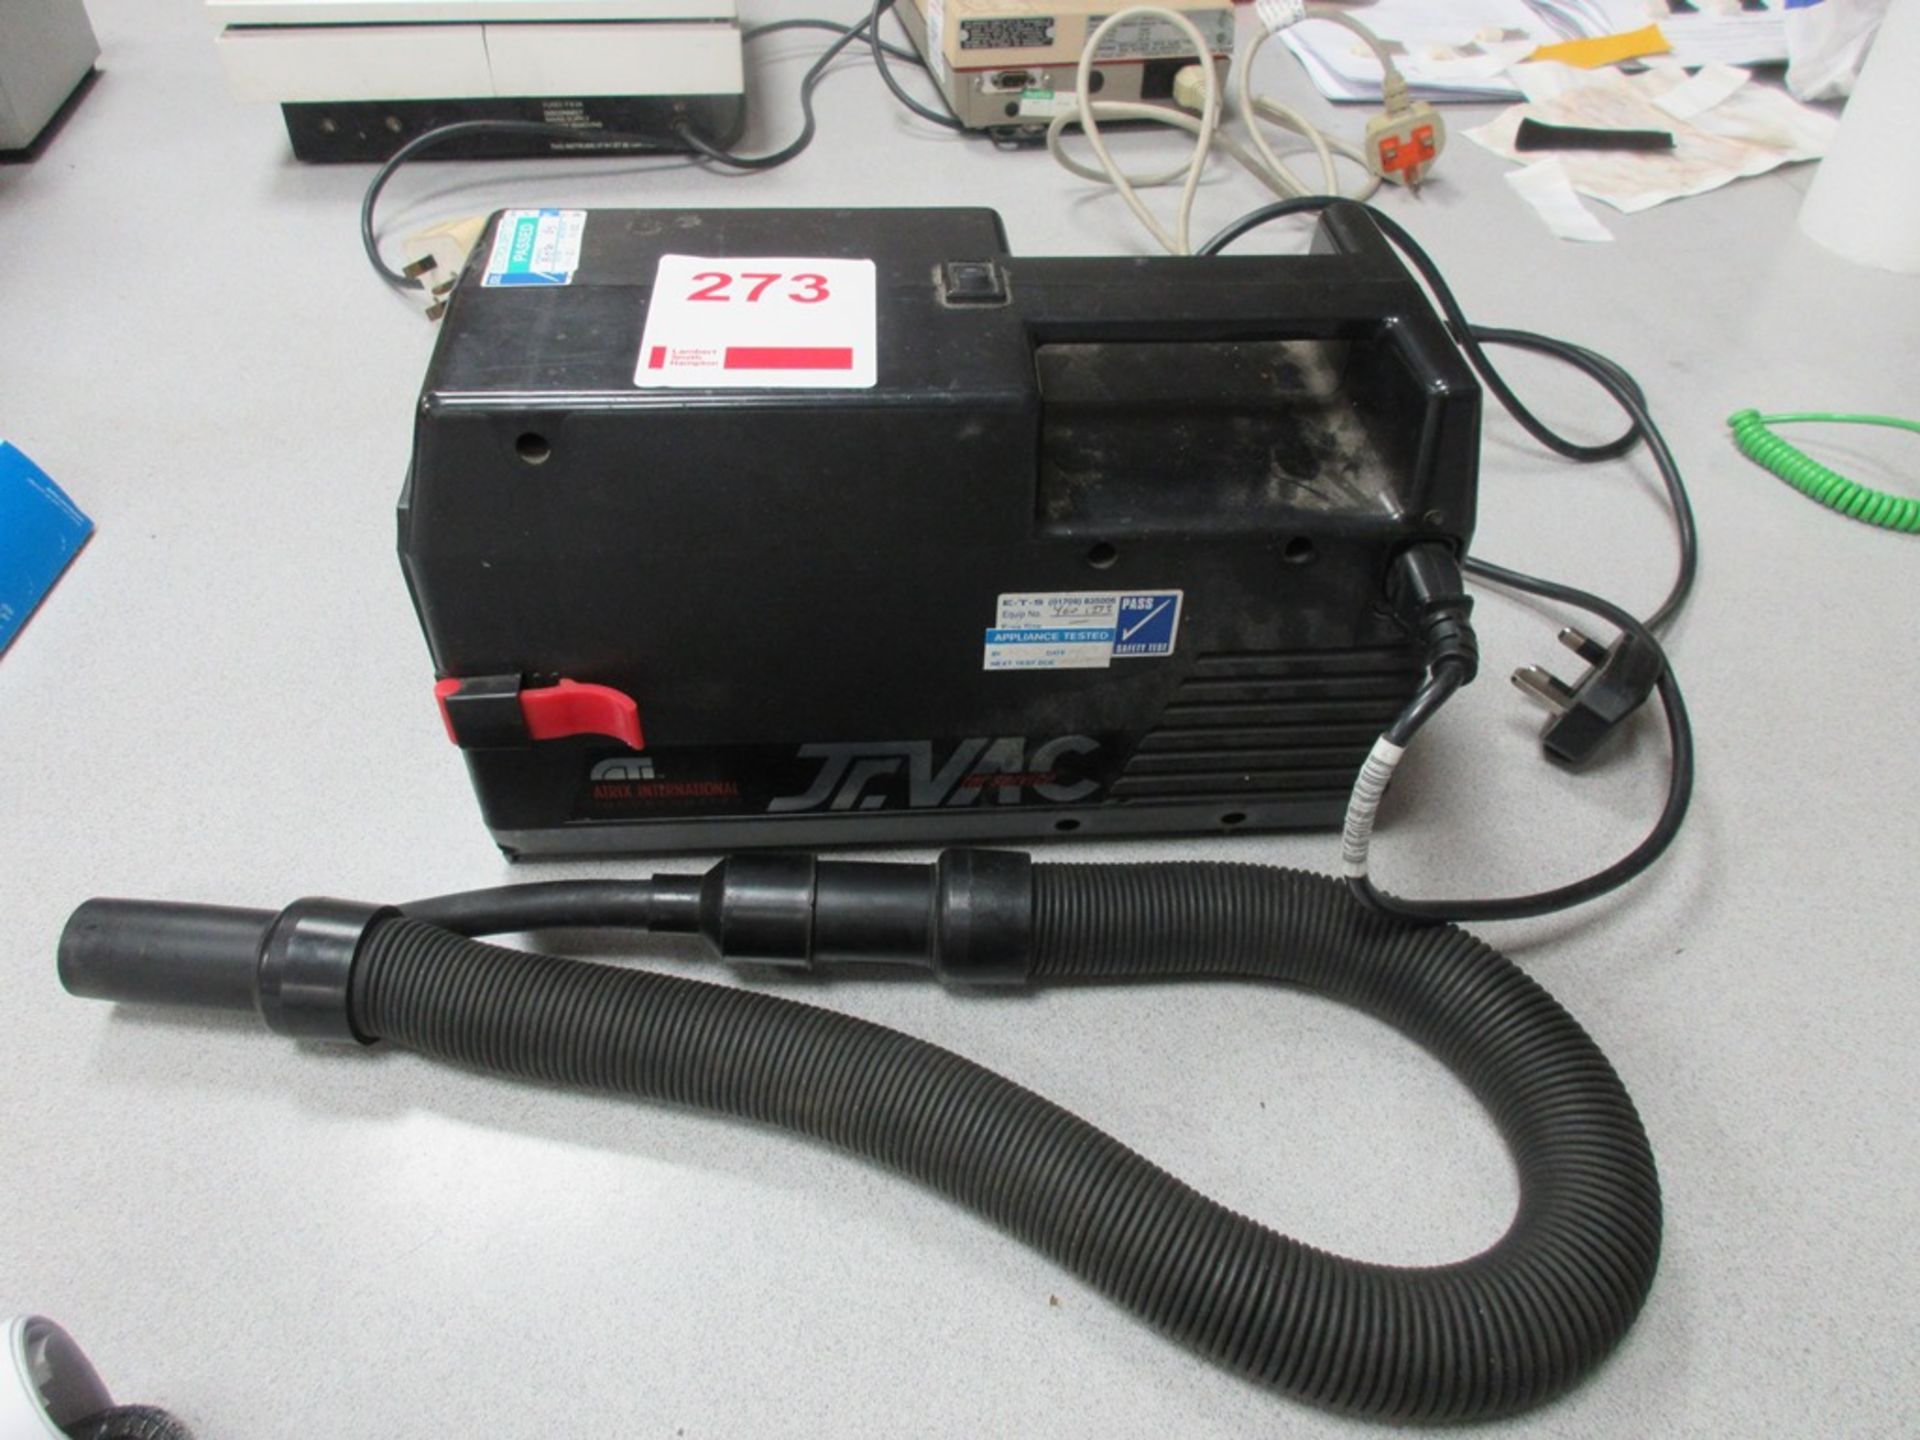 Atrix International Commercial vacuum cleaner, model JR, serial no. 25585